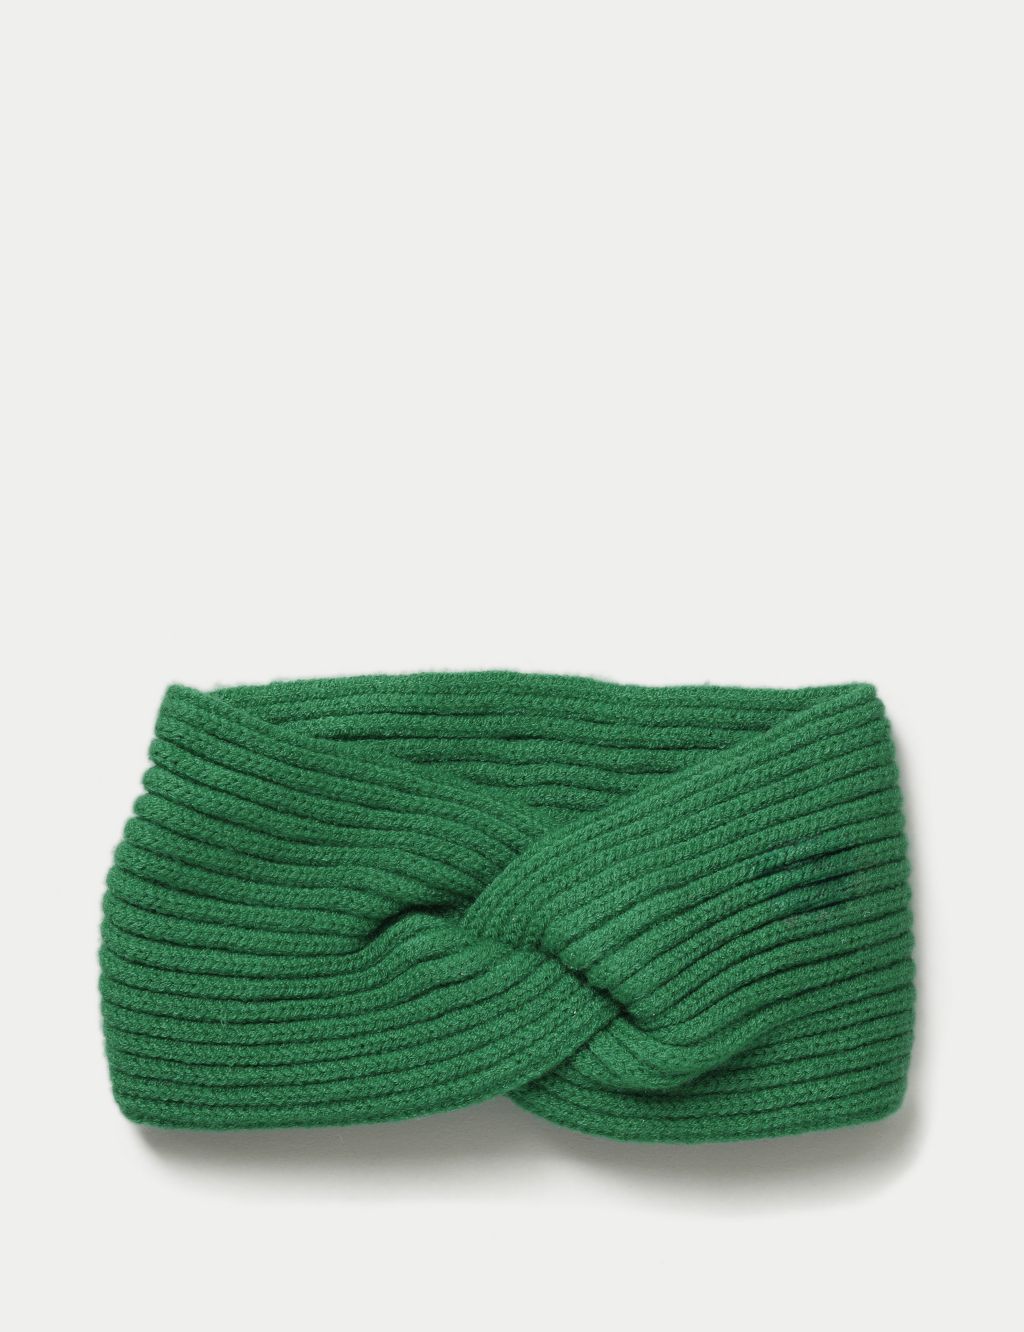 Green Knitted Headband image 1